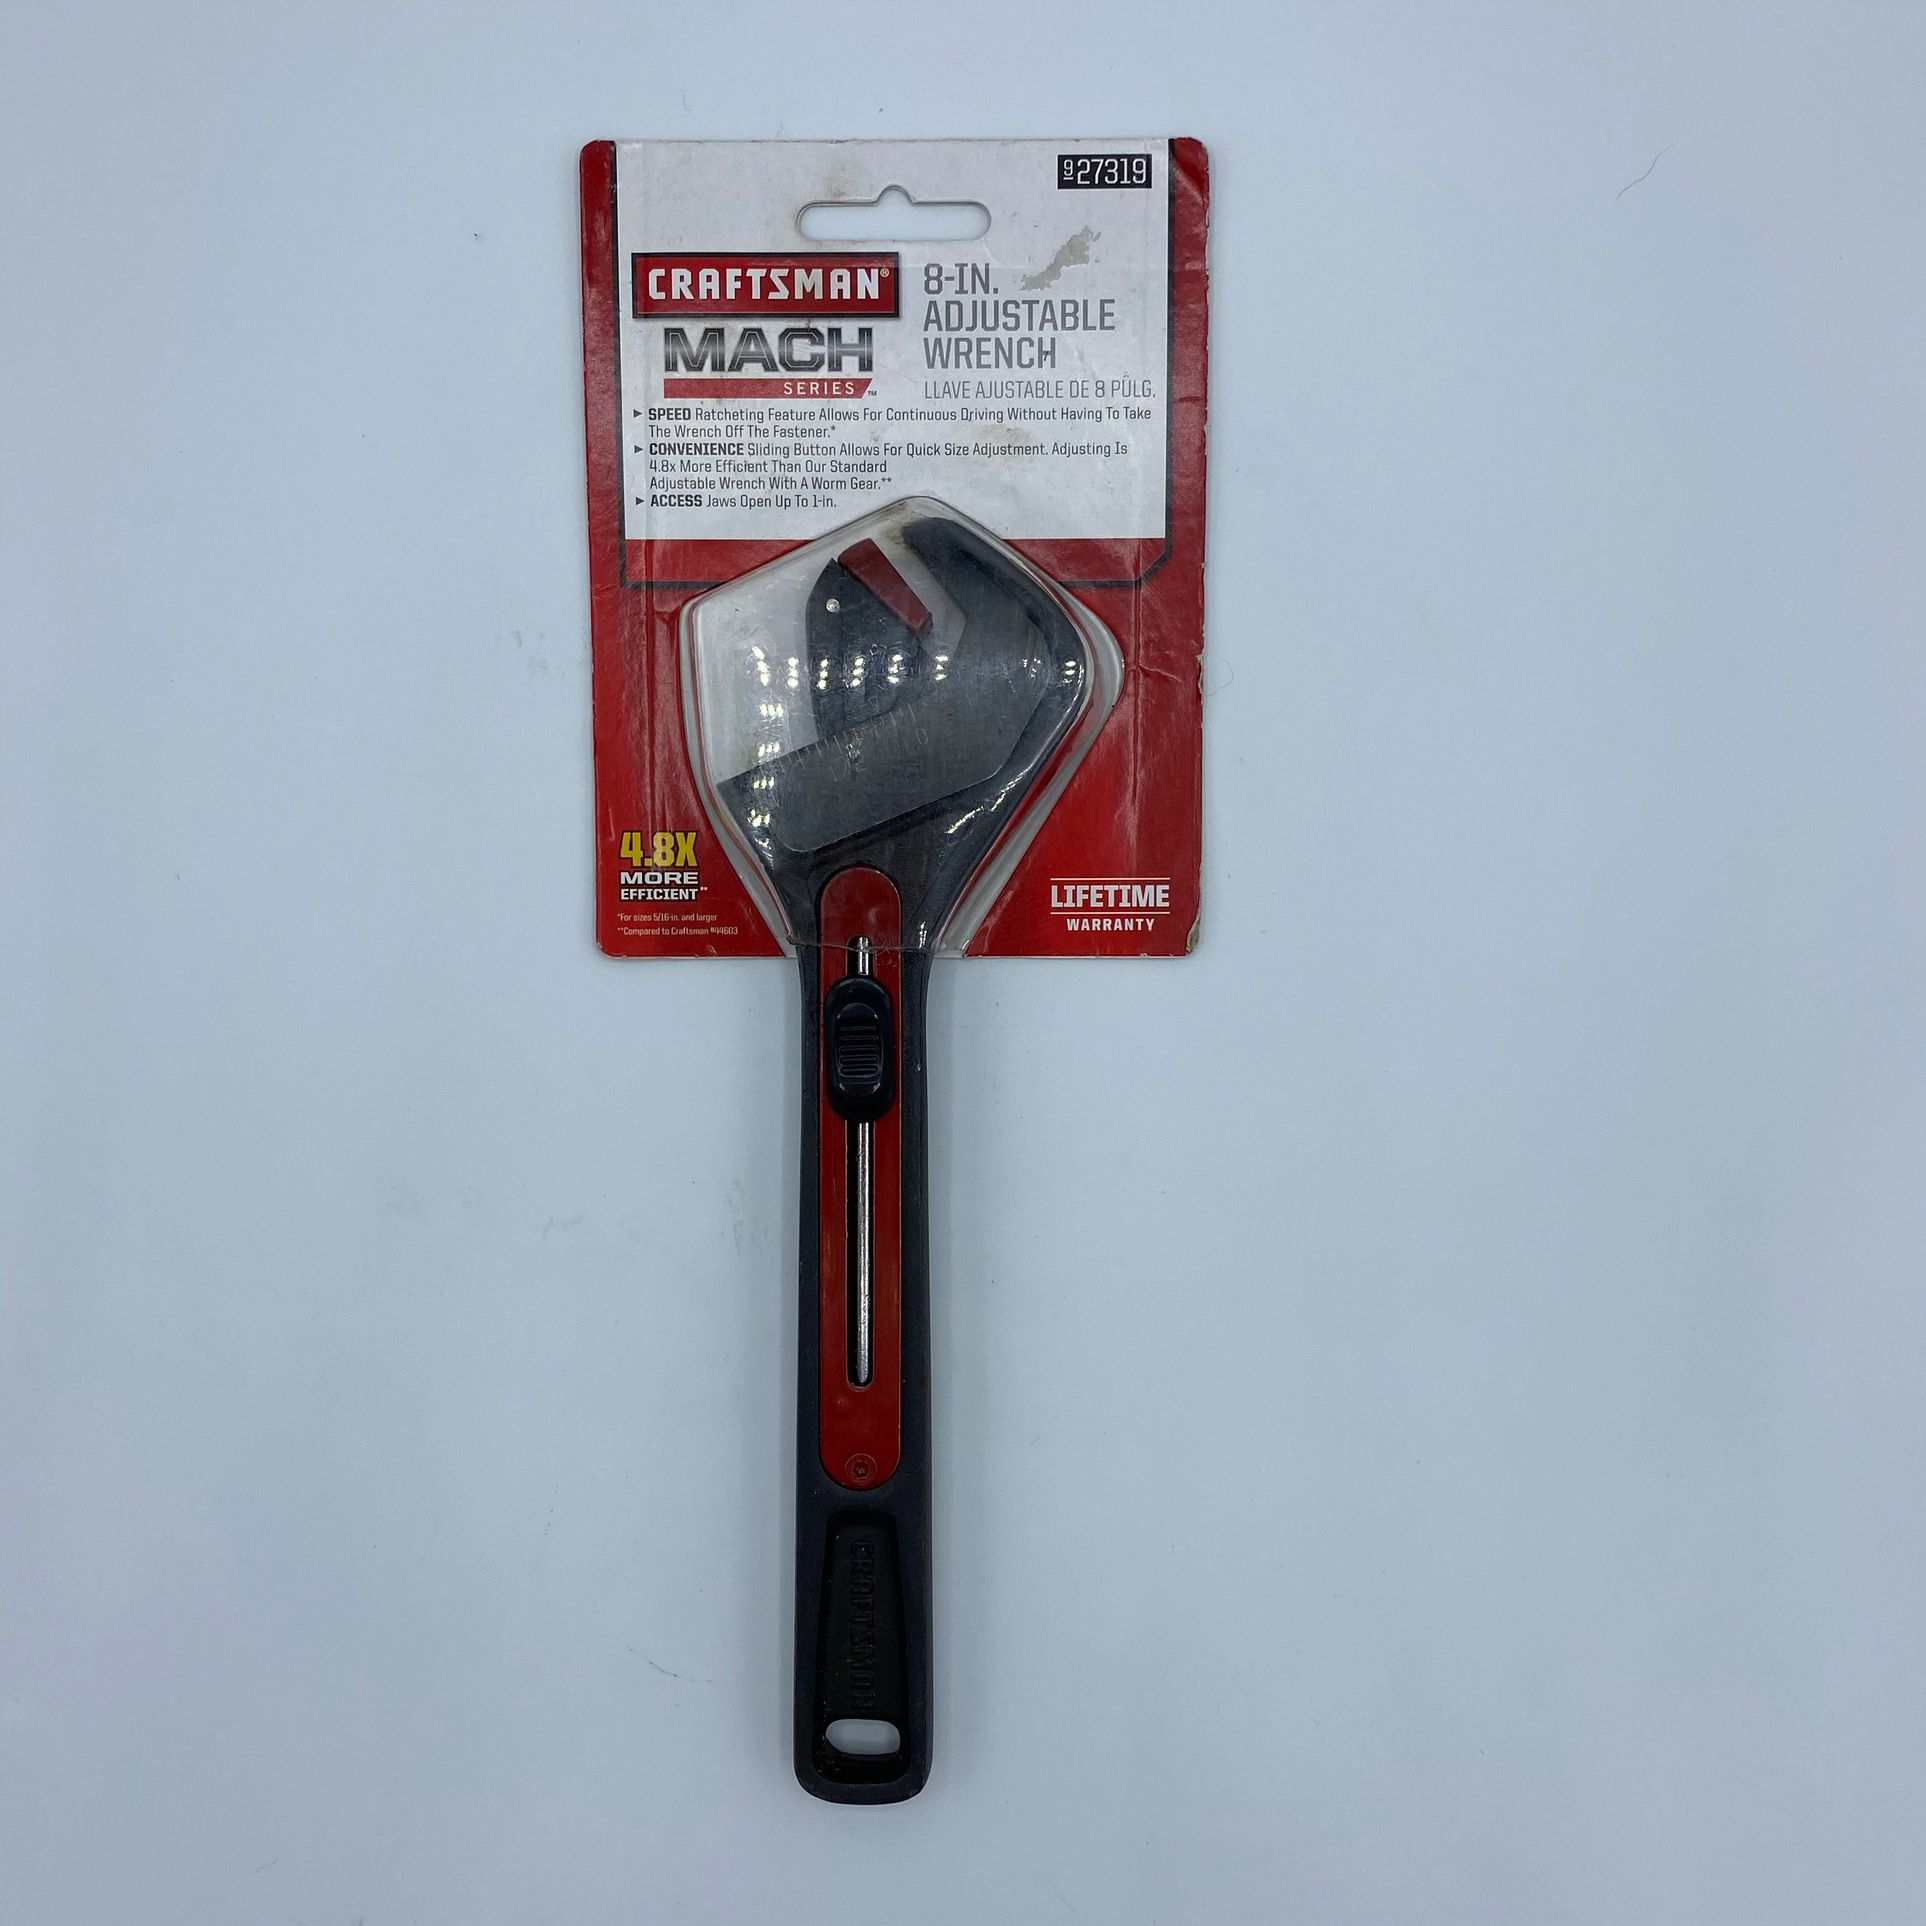 NEW Craftsman 8” Adjustable Wrench 27319 Mach Series Lifetime Warranty